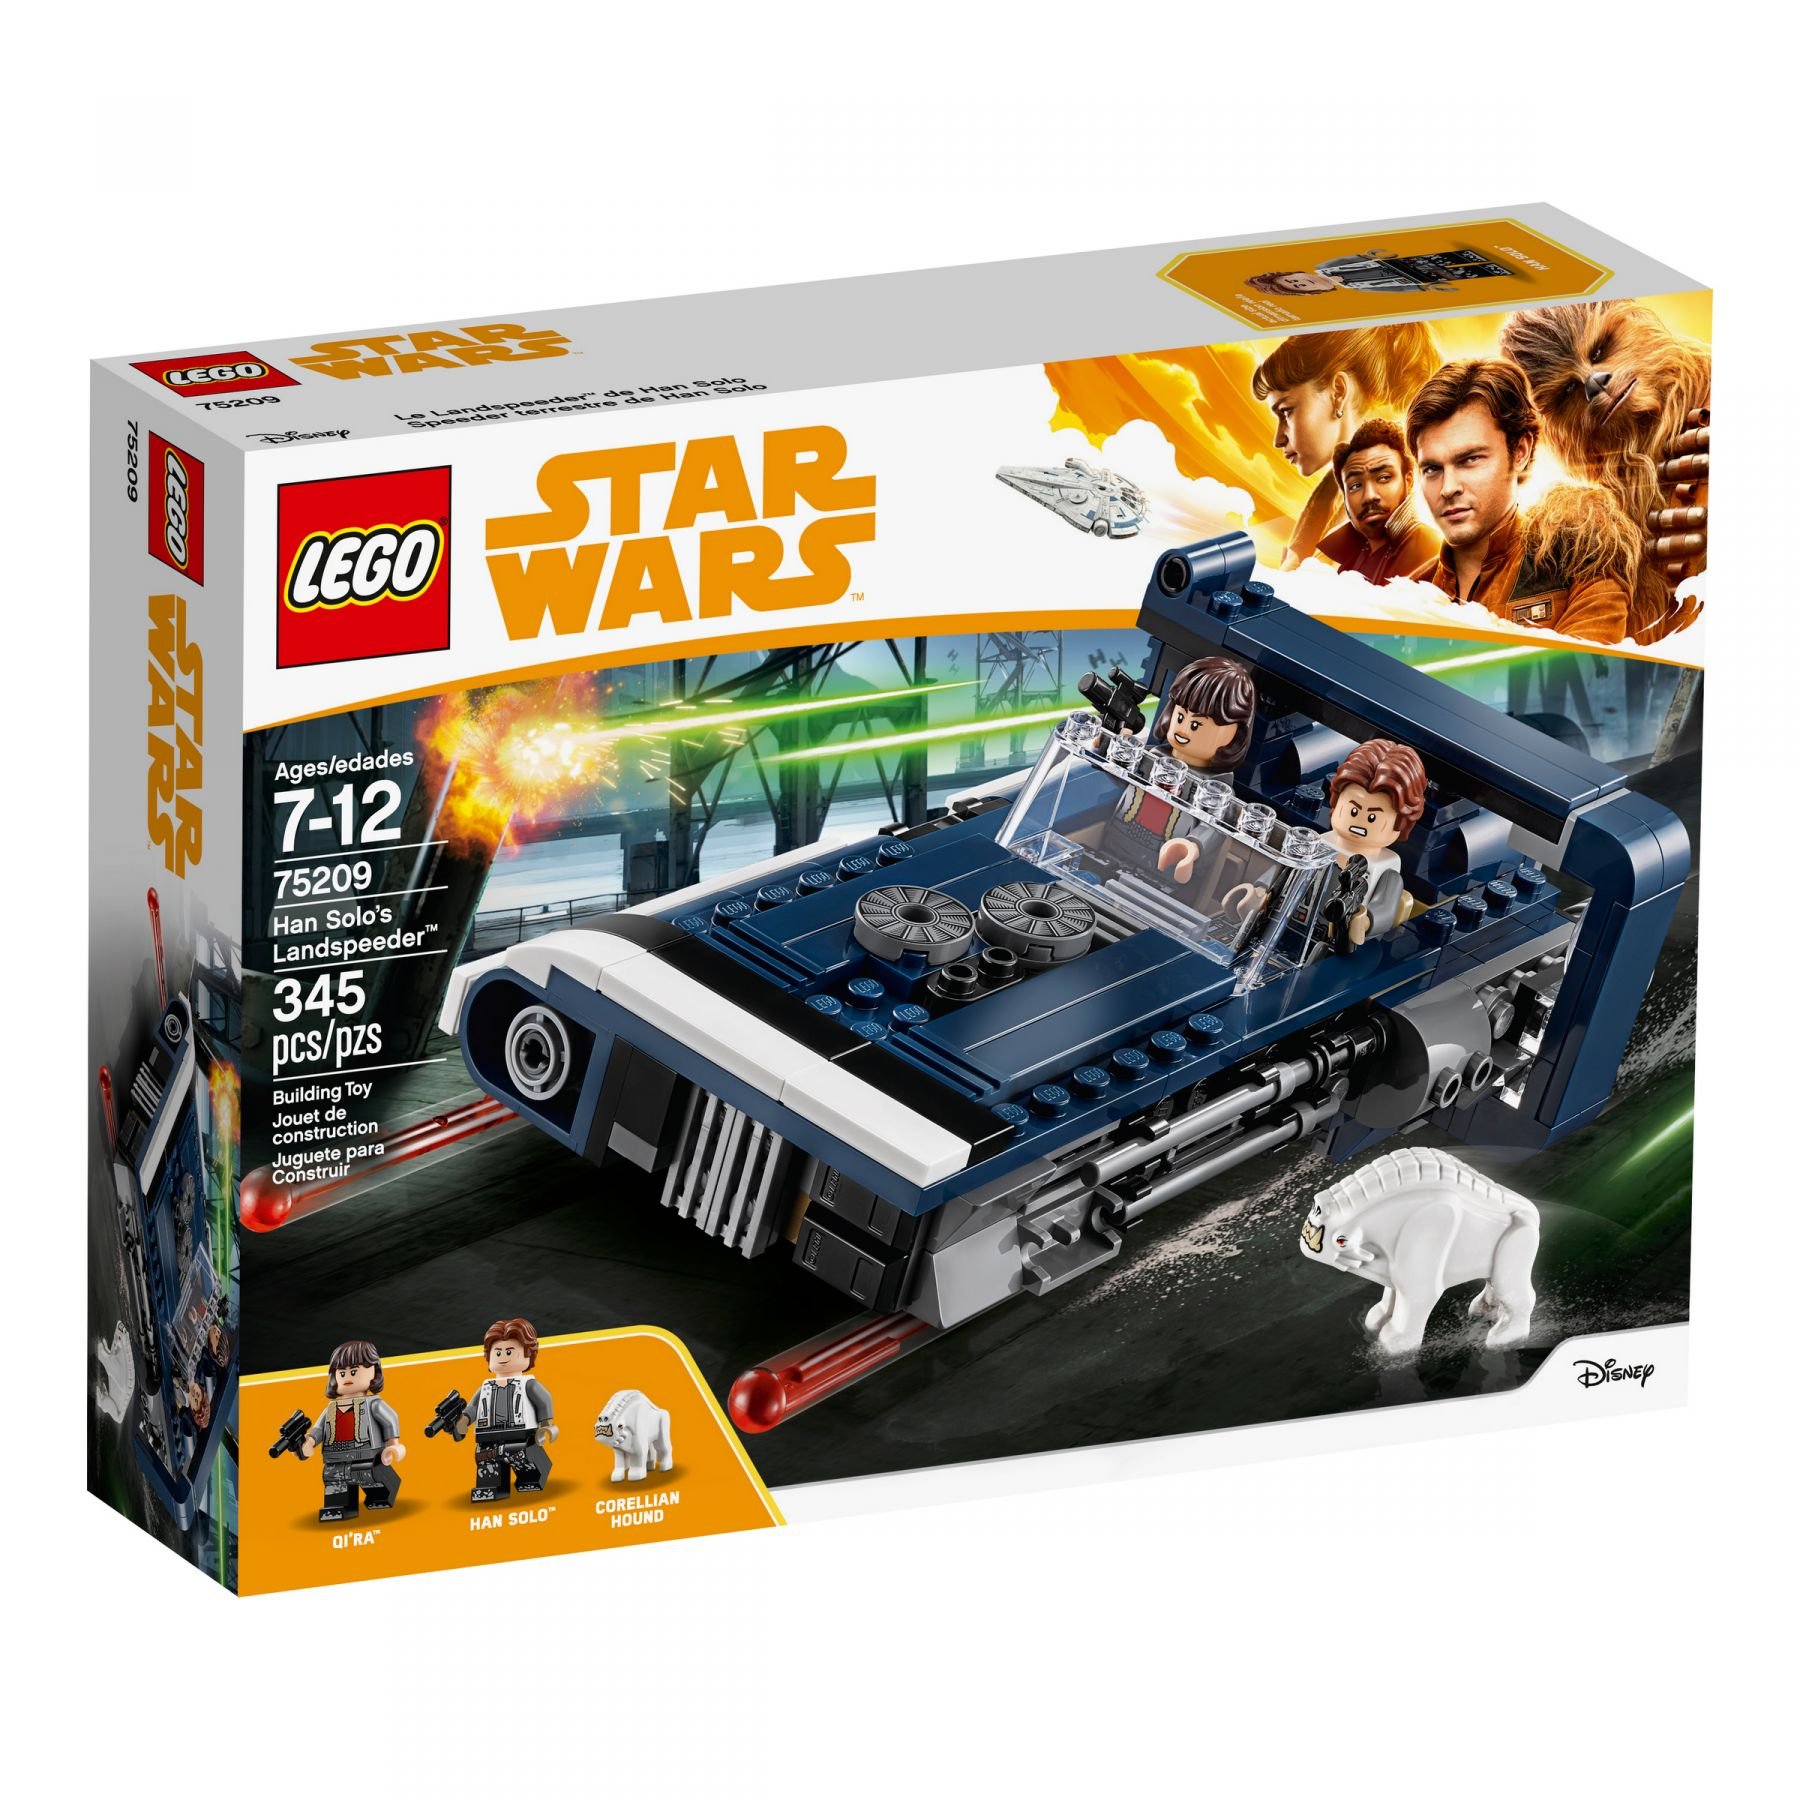 LEGO Star Wars 75209 Han Solo's Landspeeder™ LEGO_75209_alt1.jpg